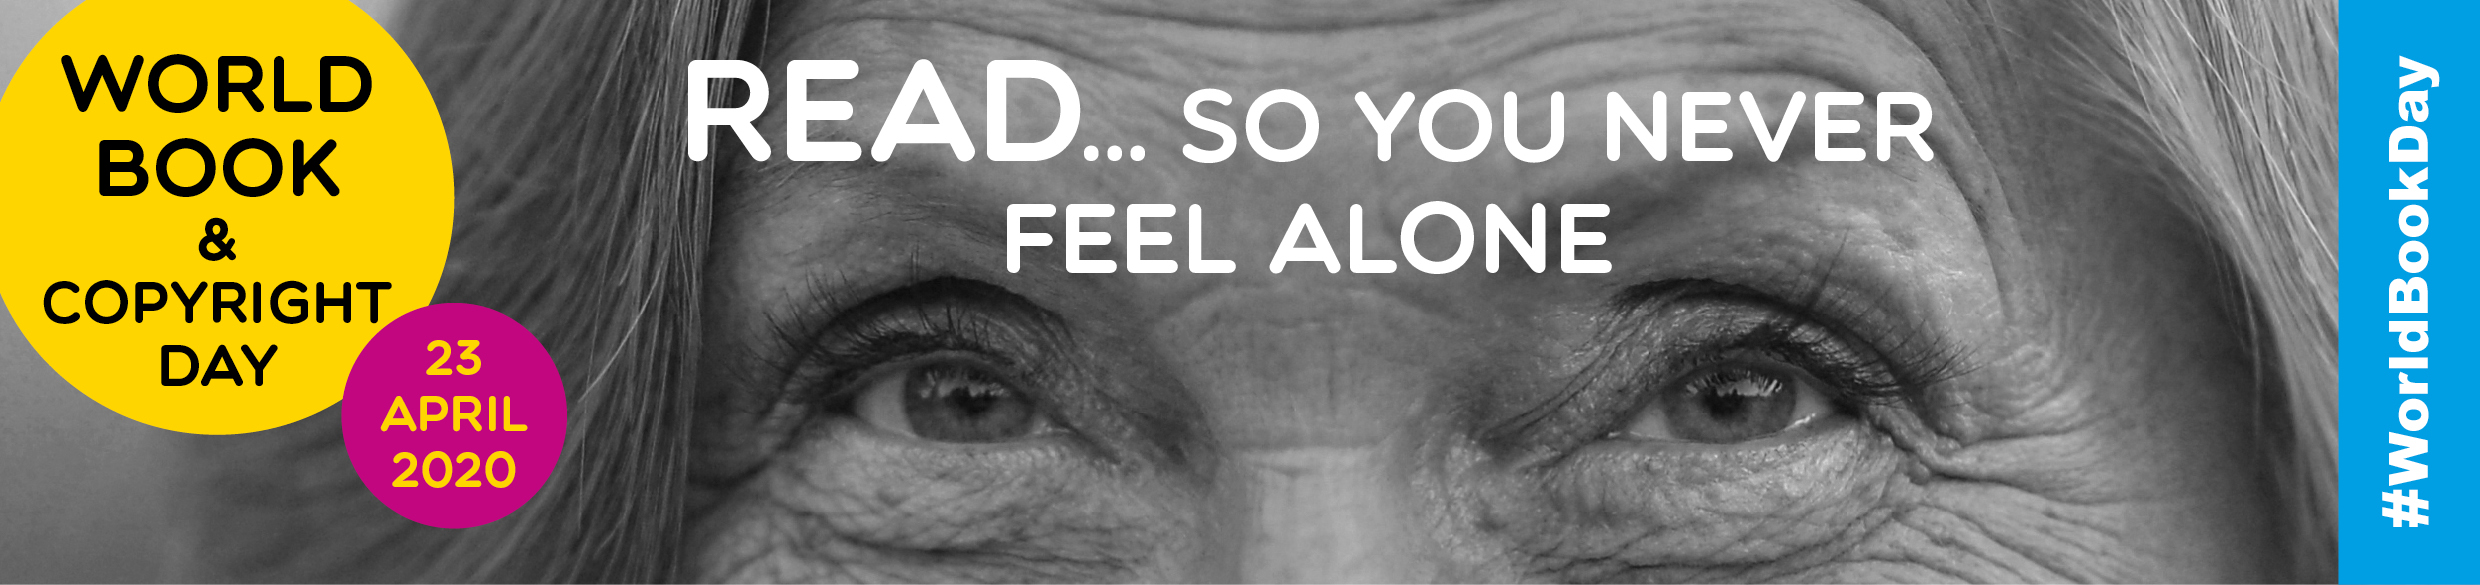 Read… so you never feel alone. Ein Motto zum UNESCO-Welttag des Buches